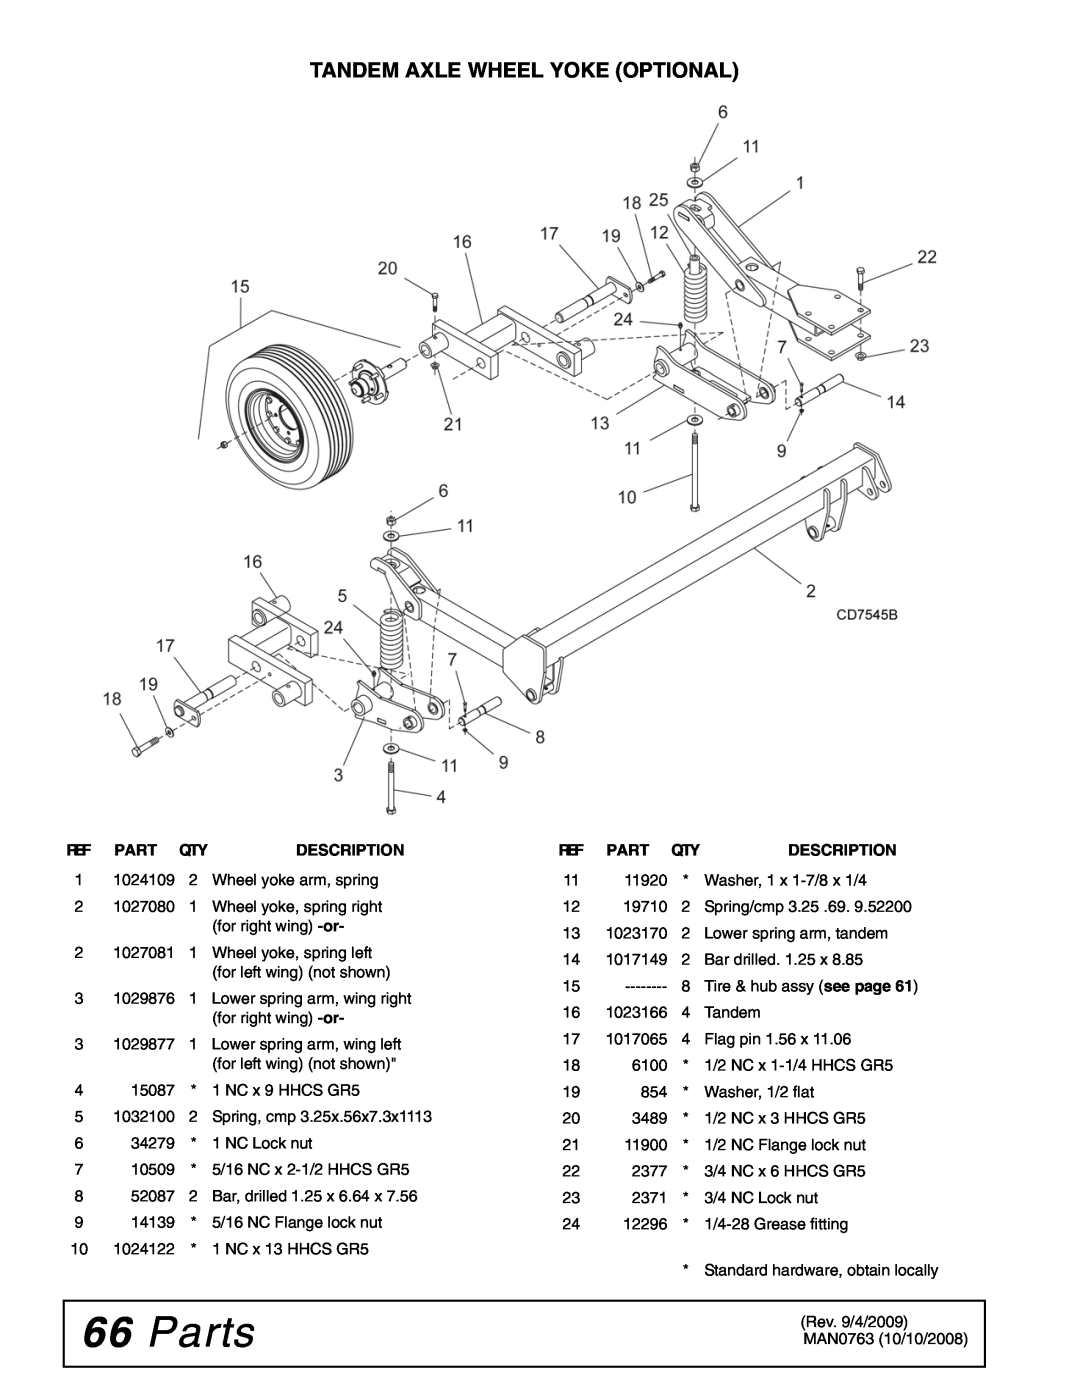 Woods Equipment BW240HDQ manual Parts, Tandem Axle Wheel Yoke Optional, Ref Part Qty, Description 